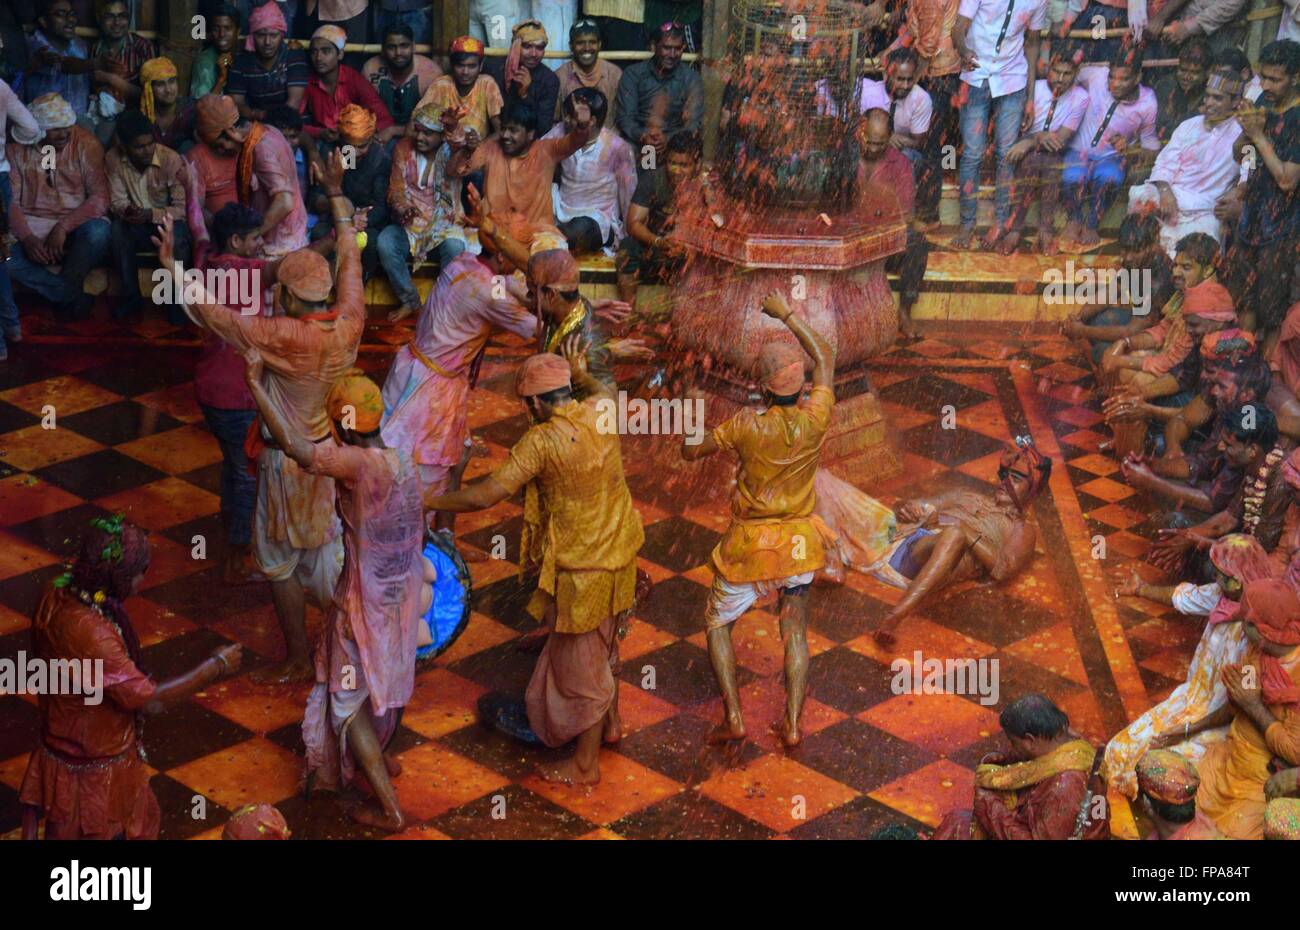 Mathura, India. 17th Mar, 2016. Devotees of Nandgaon dance during the Lathmar holi festival at Radhe Rani Temple. In the lathmar holi, the women of Barsana (hometown of Radha) beat man of Nandgaon(hometown of Lord Krishna) with wooden sticks in response to their teasing. © Prabhat Kumar Verma/Pacific Press/Alamy Live News Stock Photo